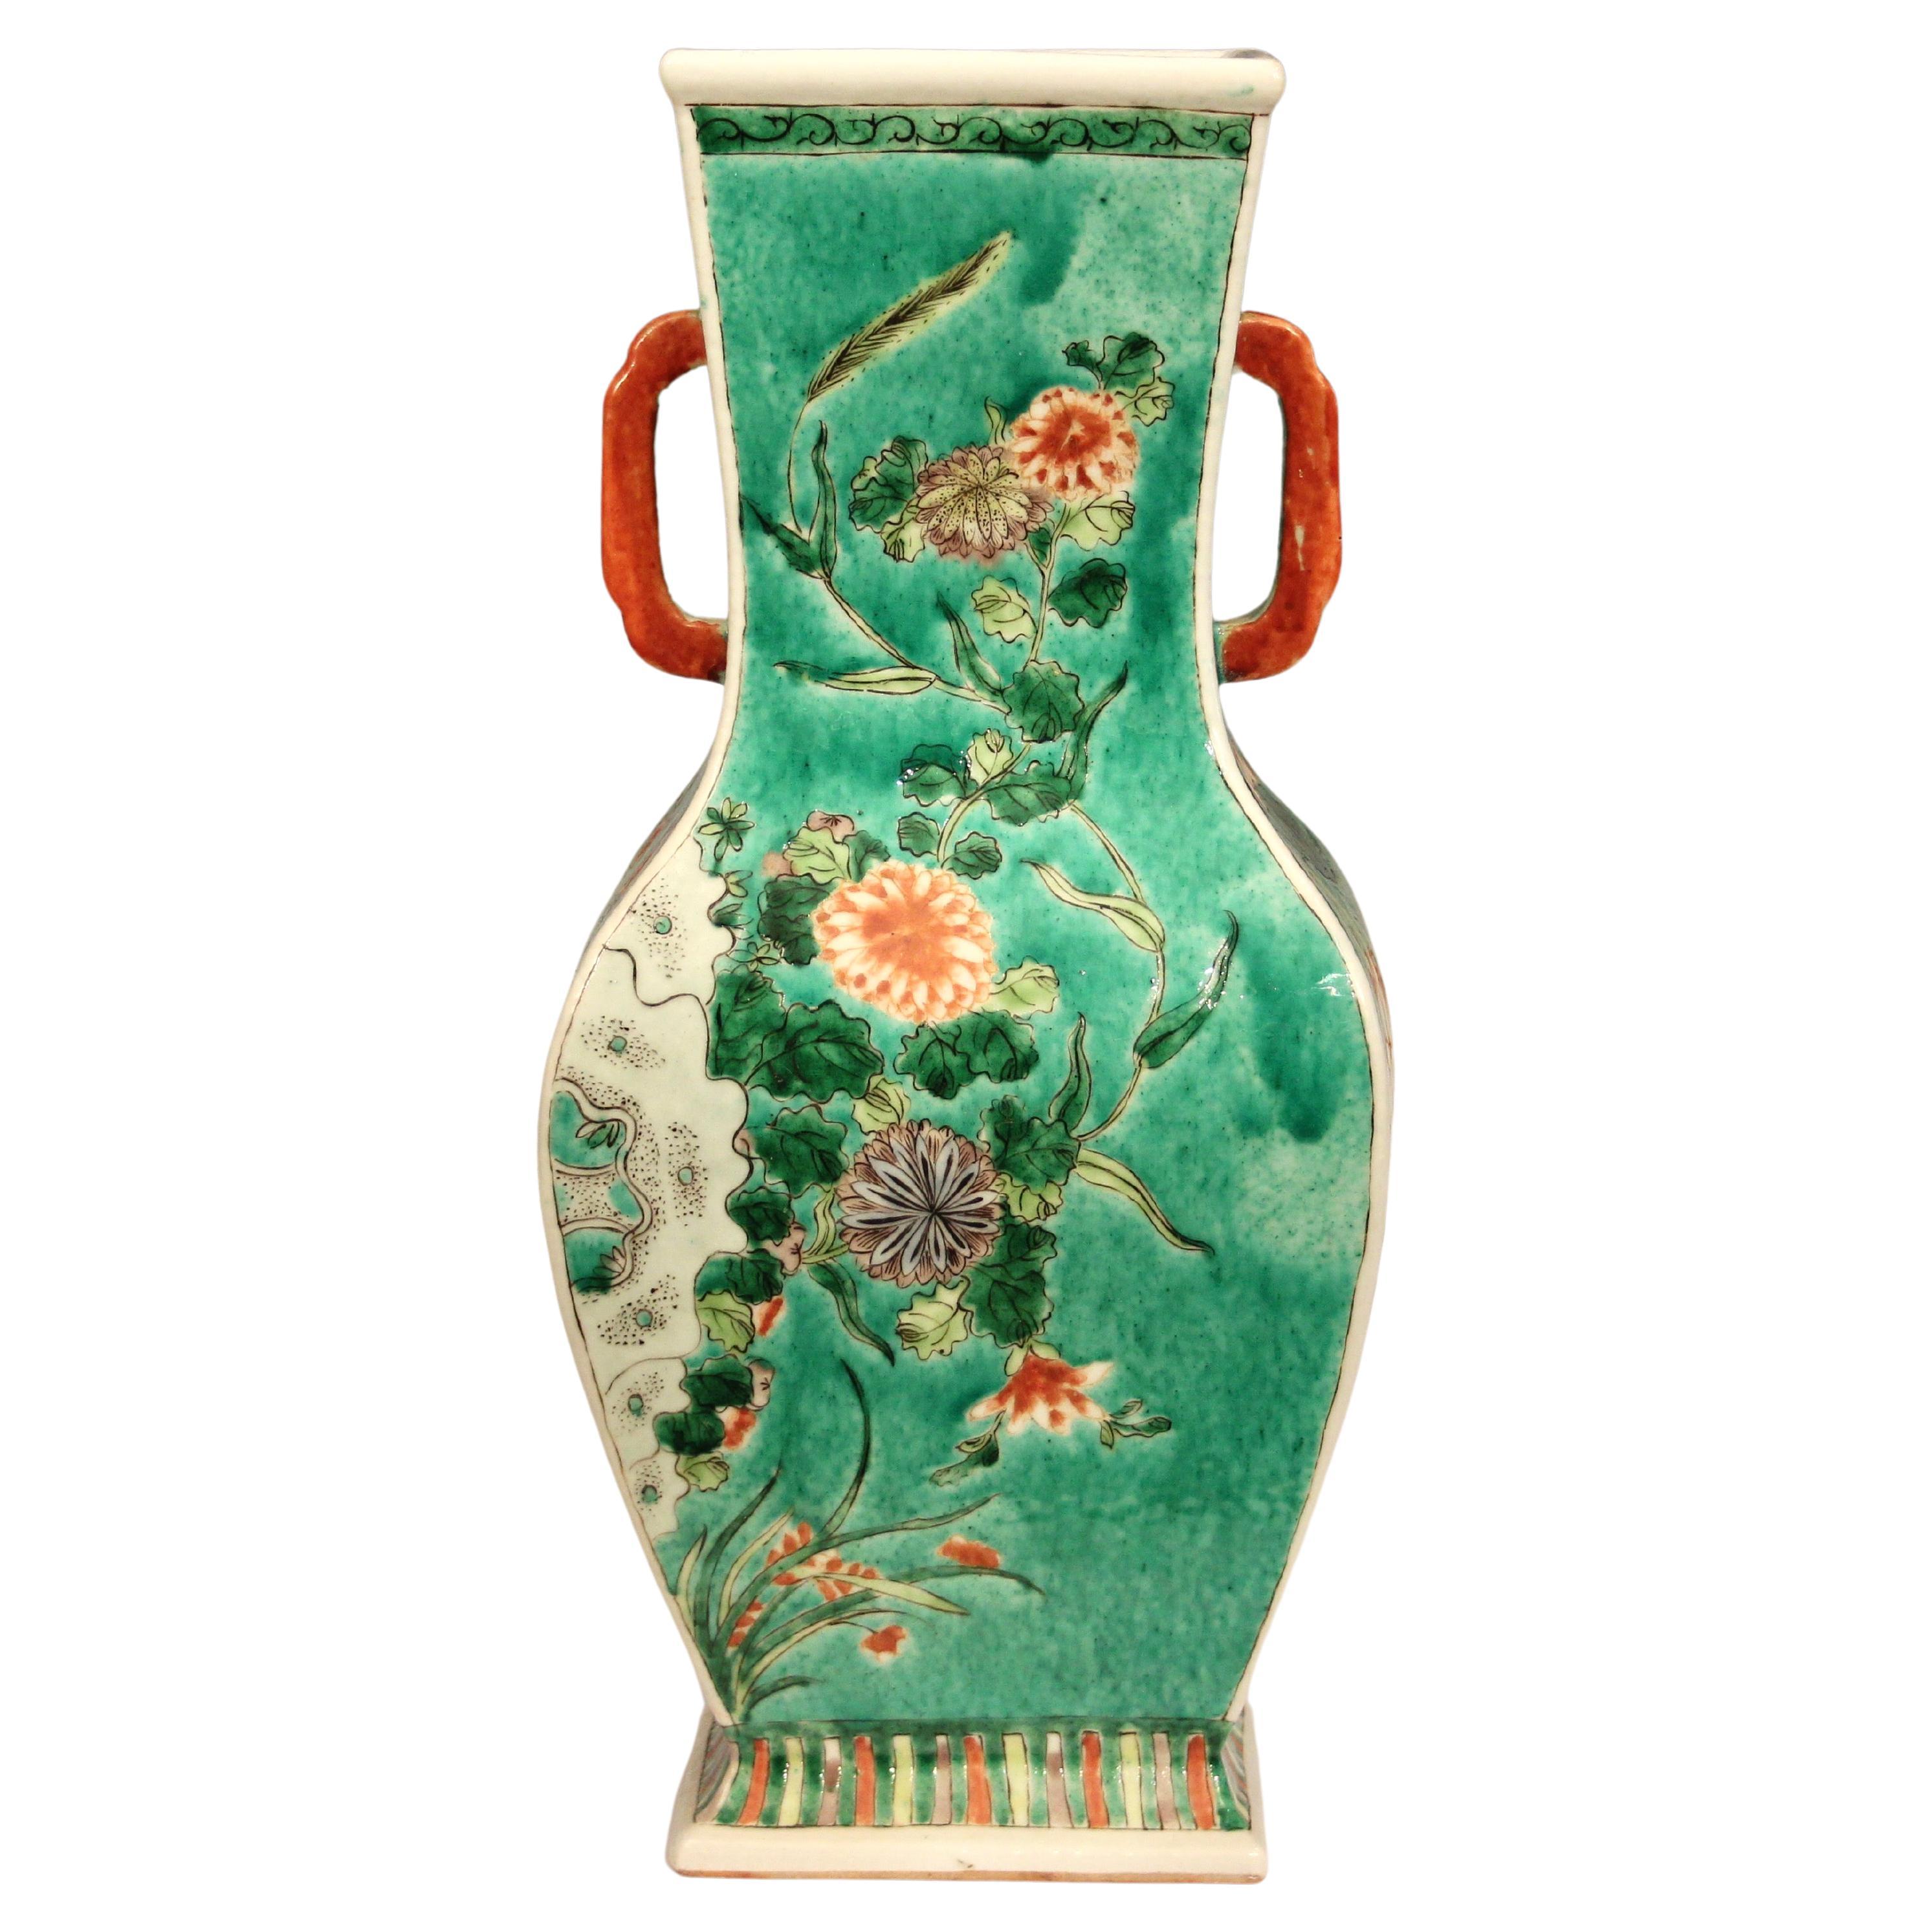 Antique Chinese Porcelain Vase Lamp Famille Verte Square China Mark Signed